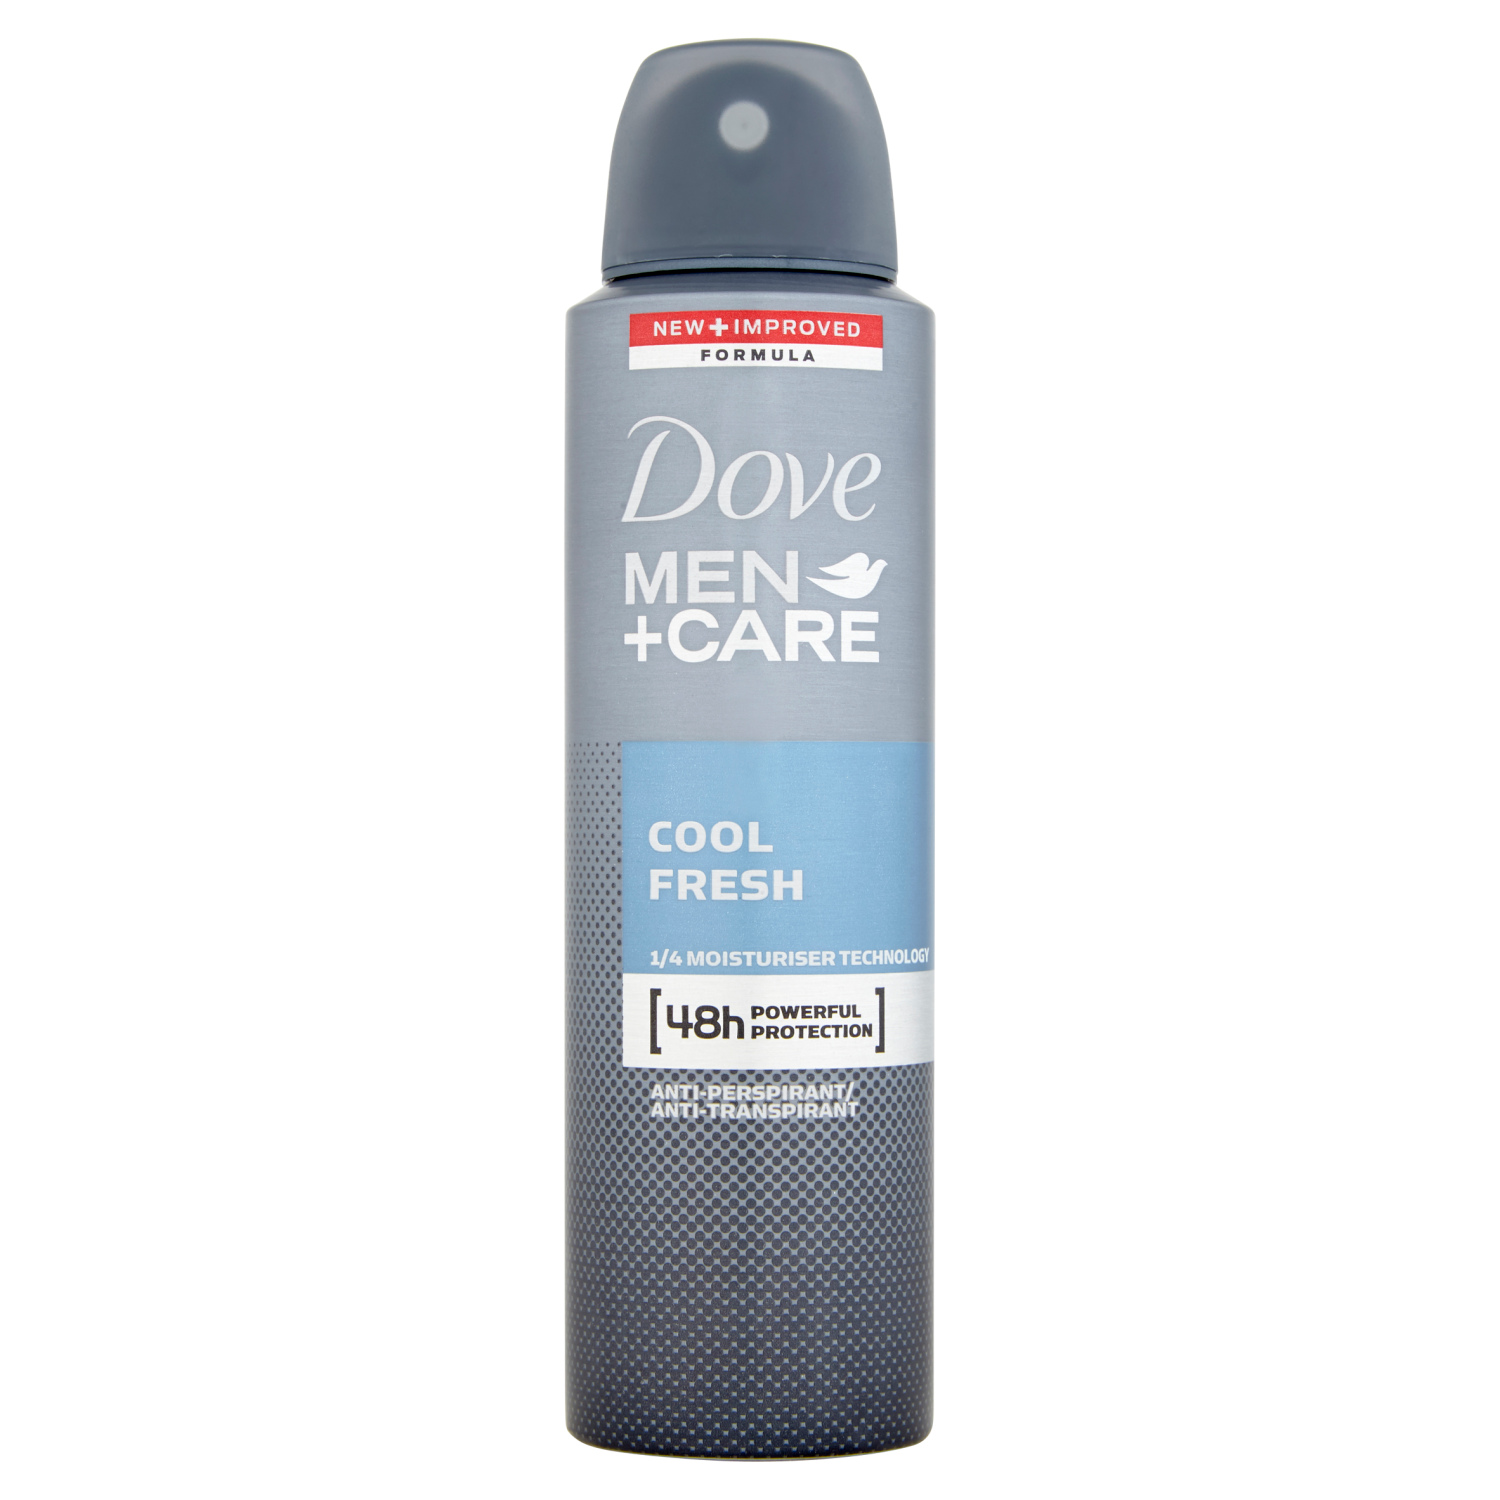 Dove Men deo spray deodorant cool fresh 150ml